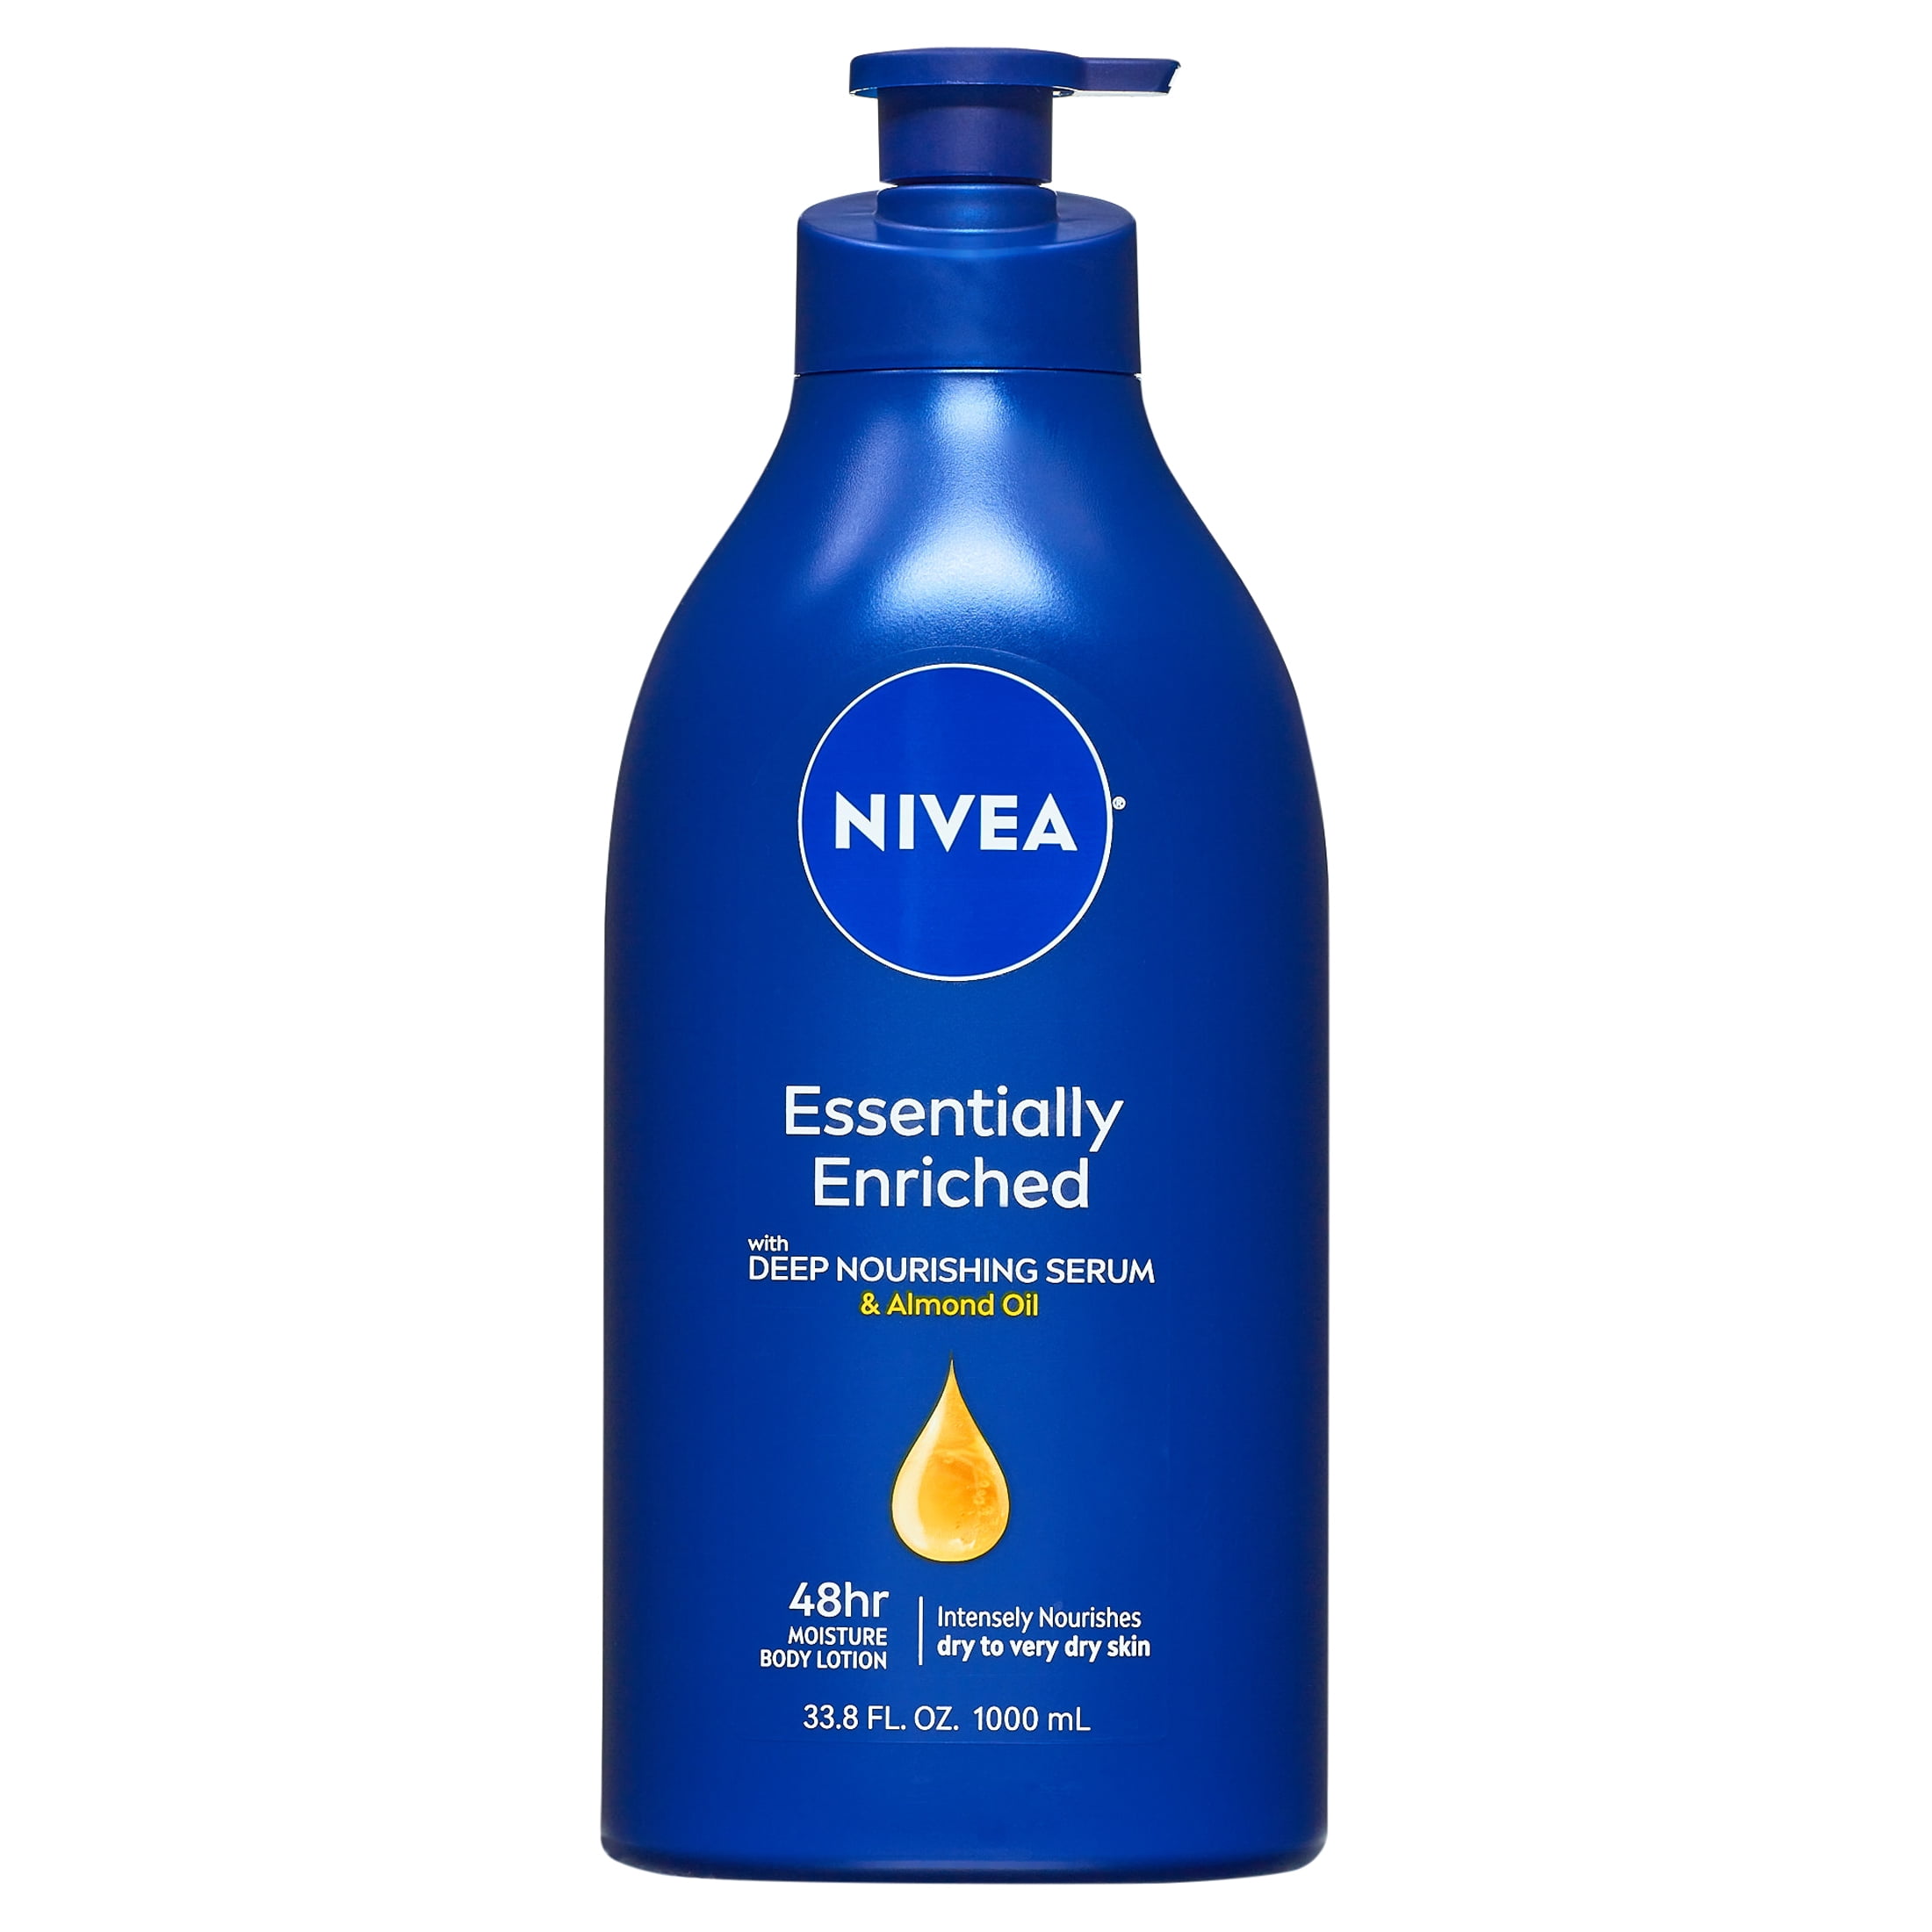 NIVEA Essentially Enriched Body Lotion for Dry Skin, 33.8 Fl Oz Pump Bottle  